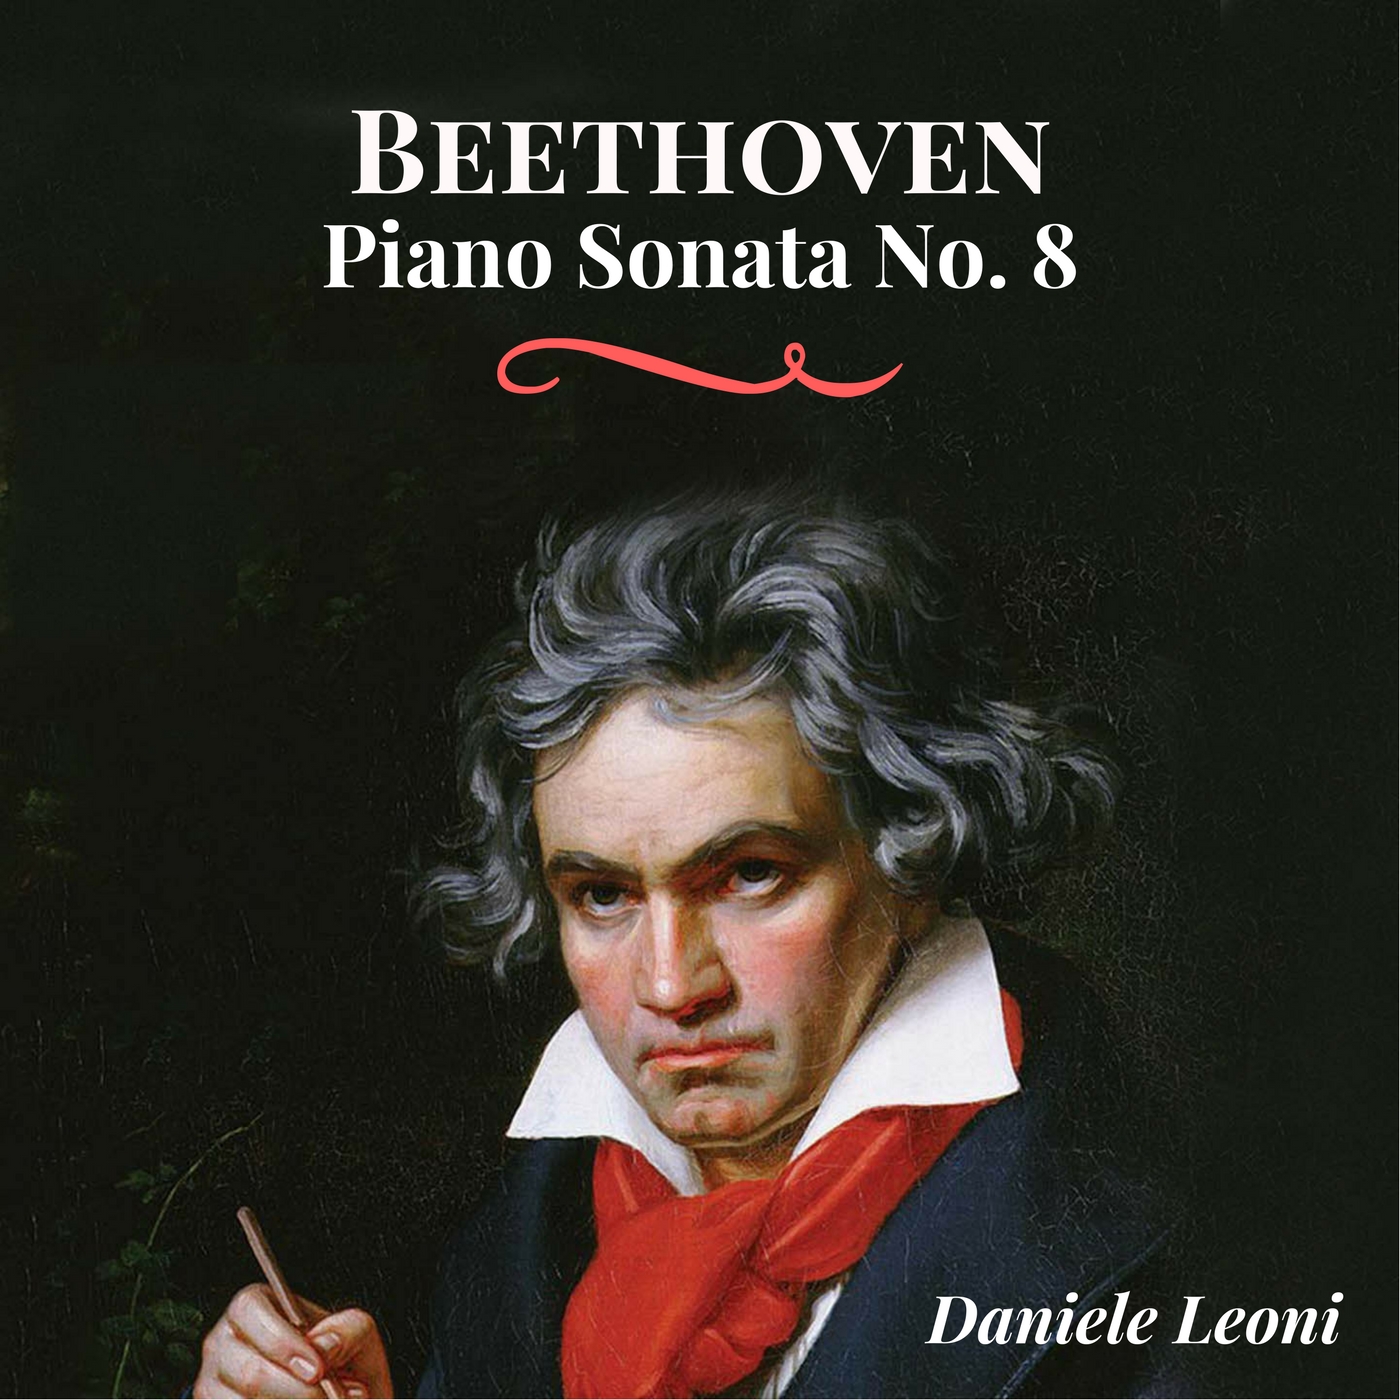 Beethoven - Piano Sonata No. 8, Op. 13 "Pathétique"